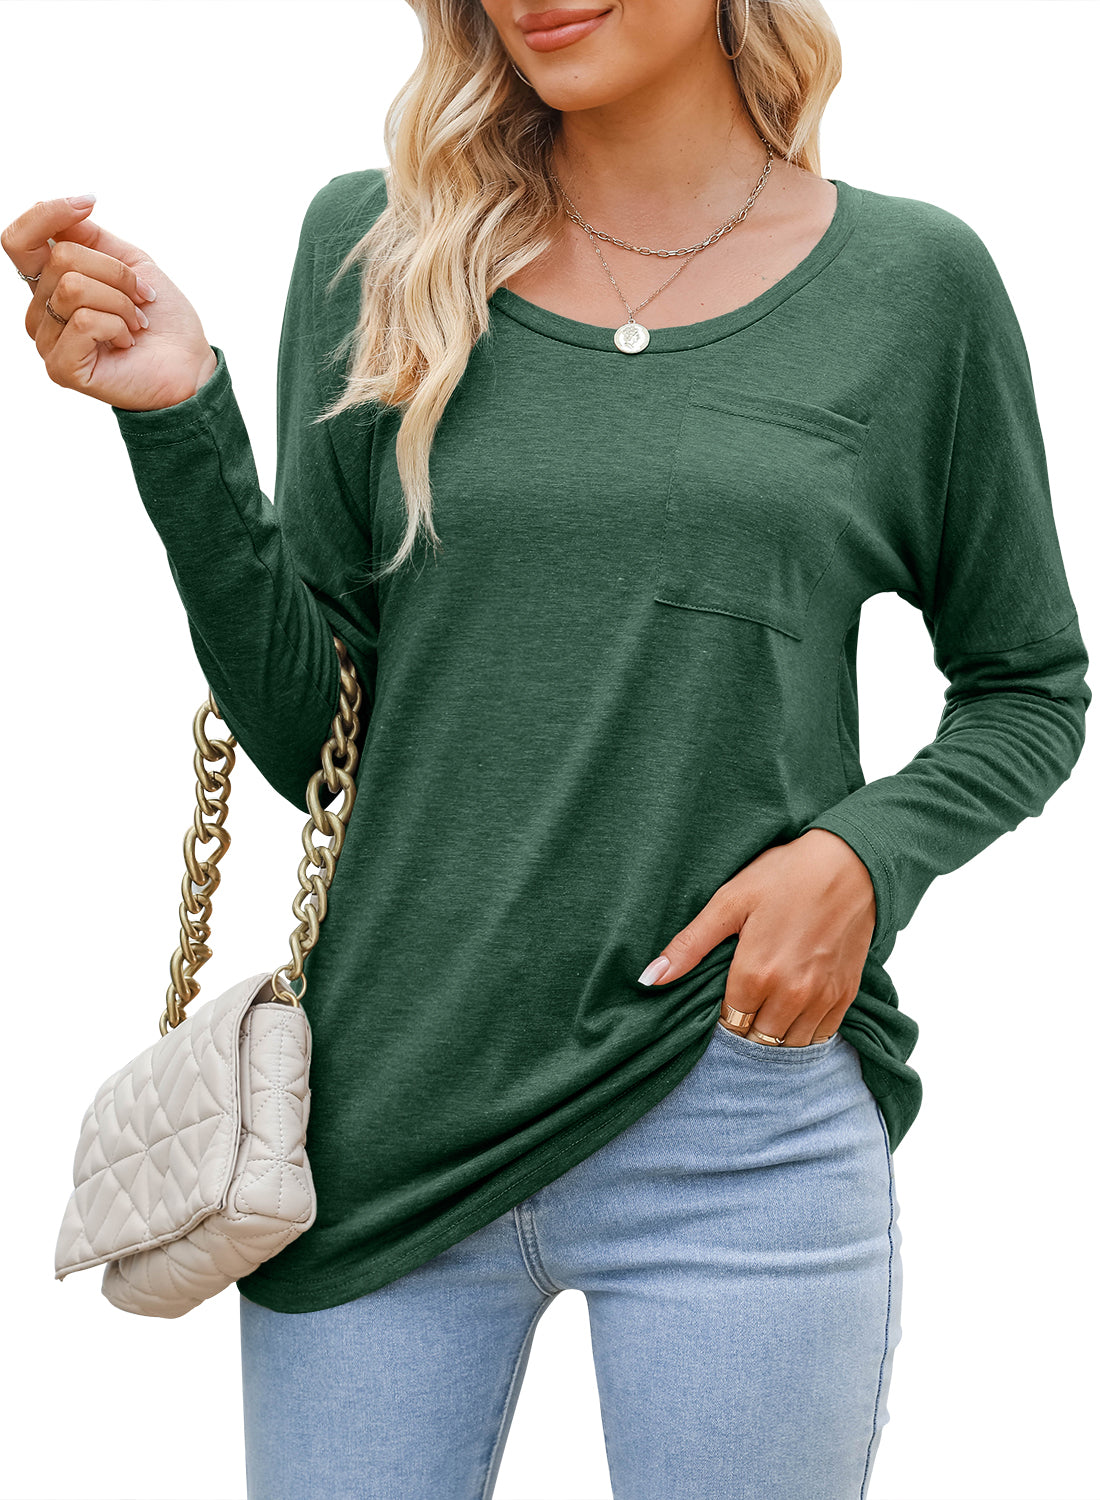 MIHOLL Women's Long Sleeve V-Neck Shirts Loose Casual Tee T-Shirt